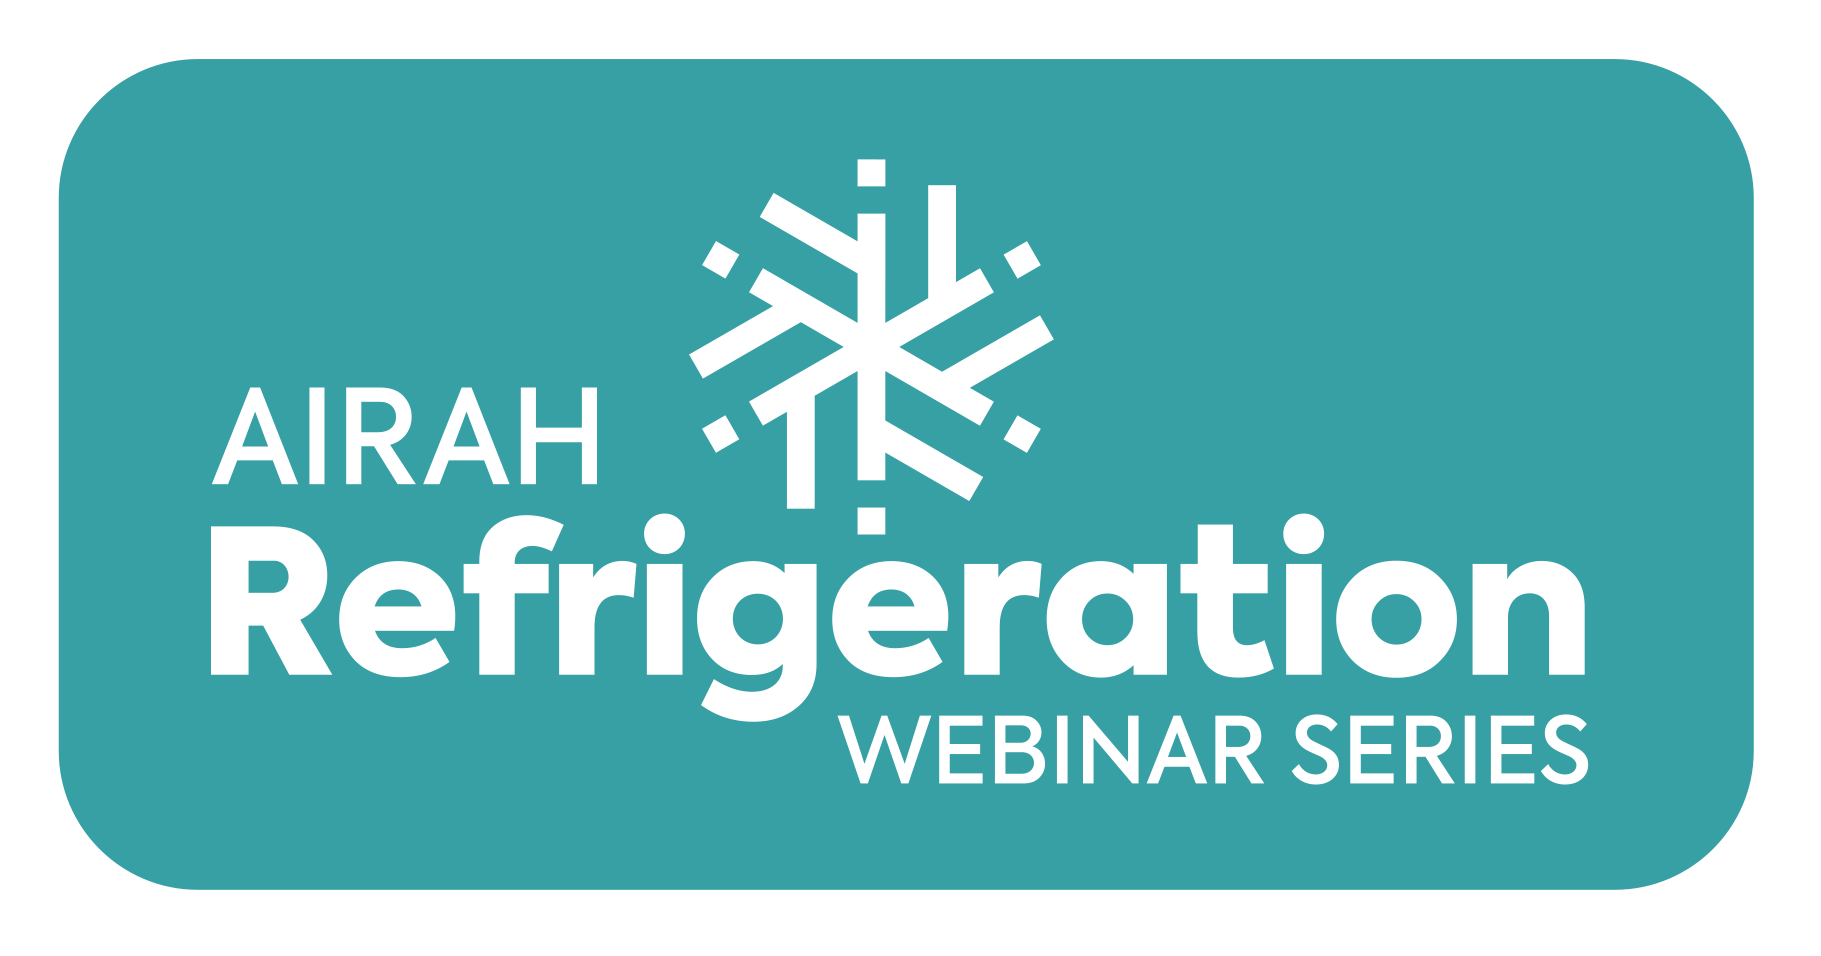 AIRAH refrigeration webinar series